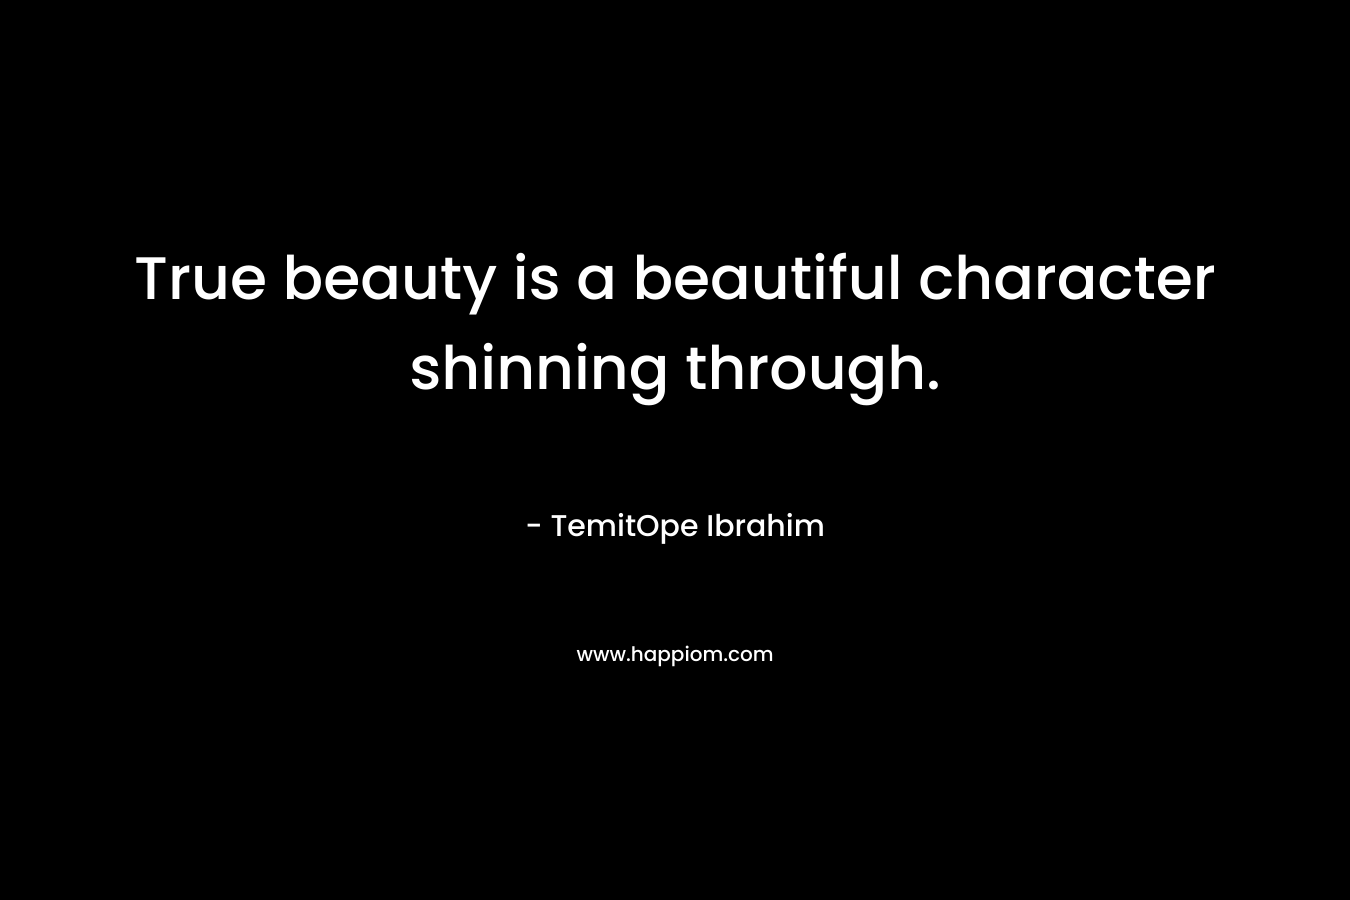 True beauty is a beautiful character shinning through.